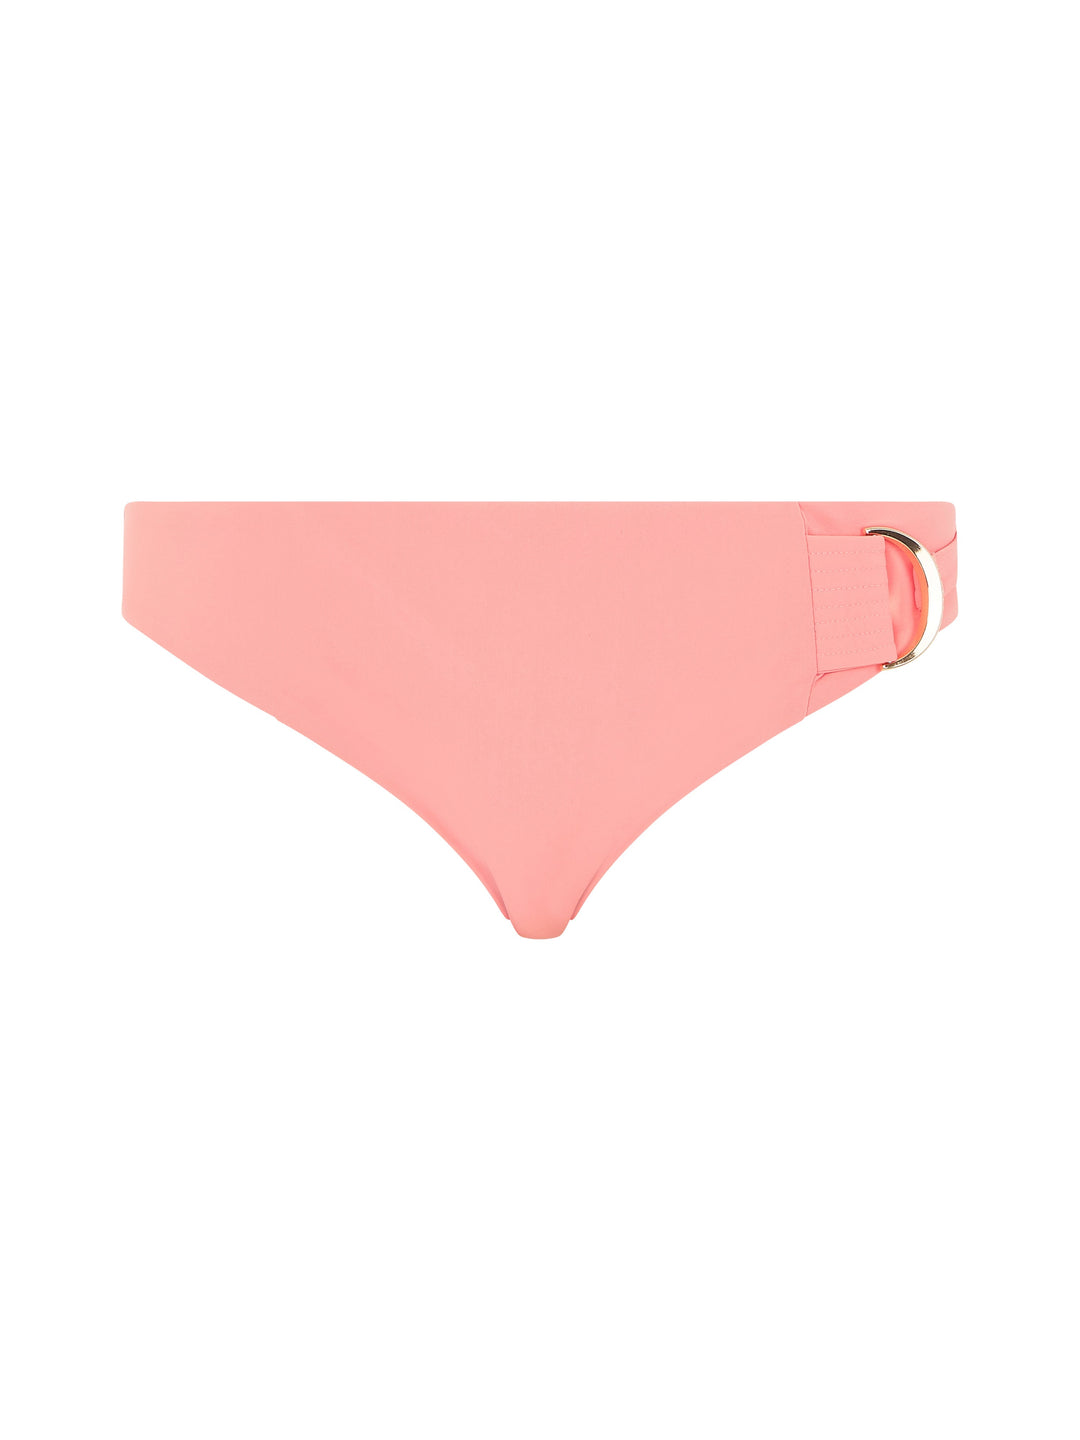 Chantelle Swimwear - Celestial Bikini Brief Rose Bikini Brief Chantelle Swimwear 